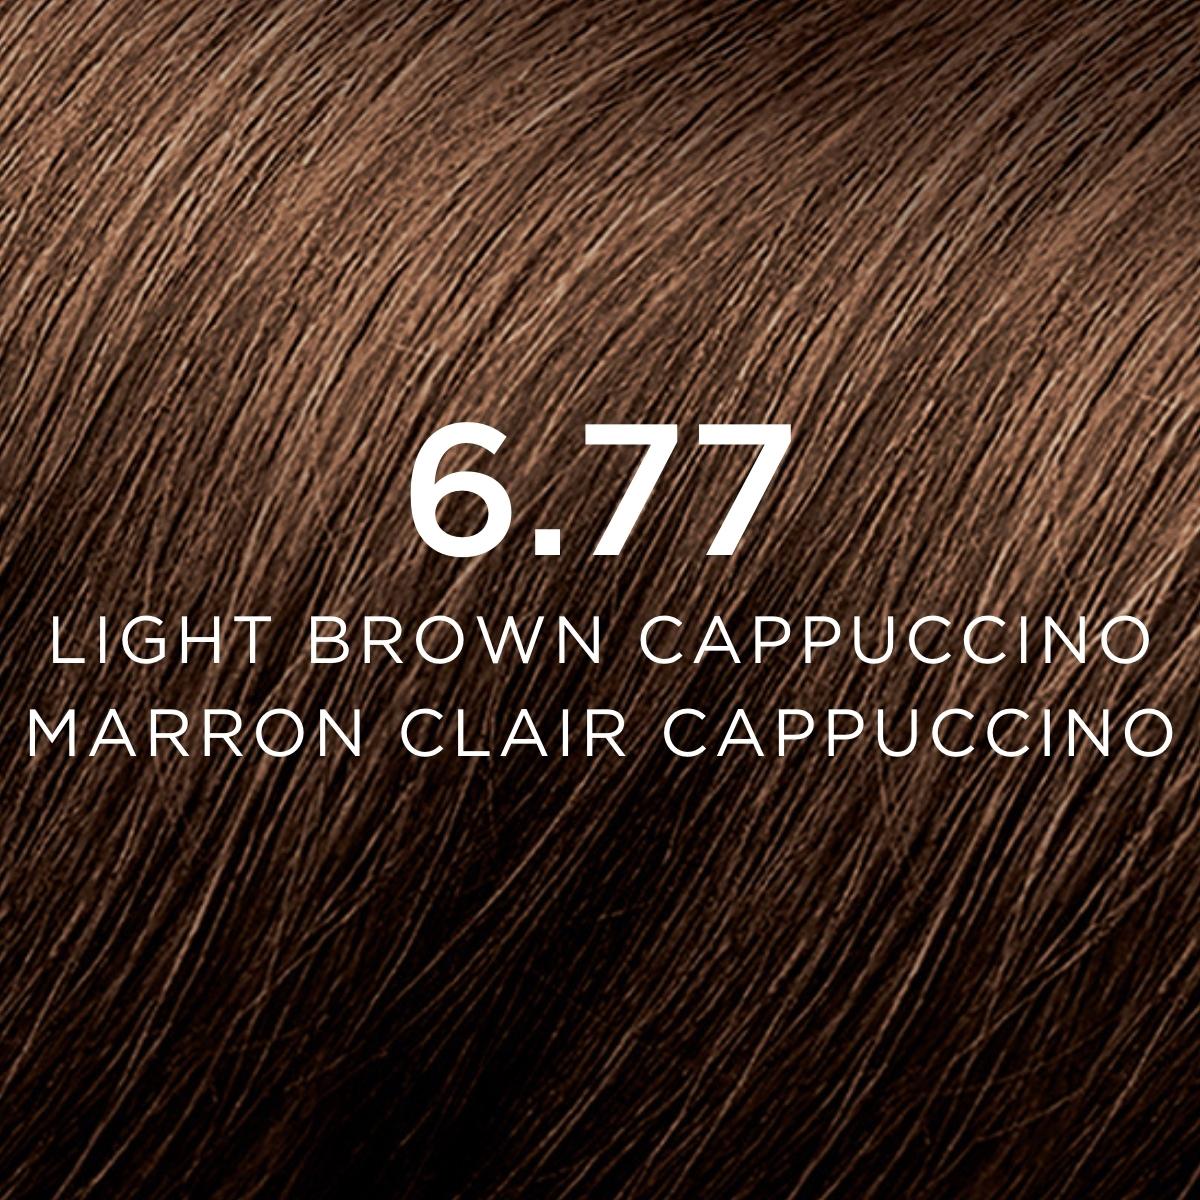 6.77 Light Brown Cappuccino